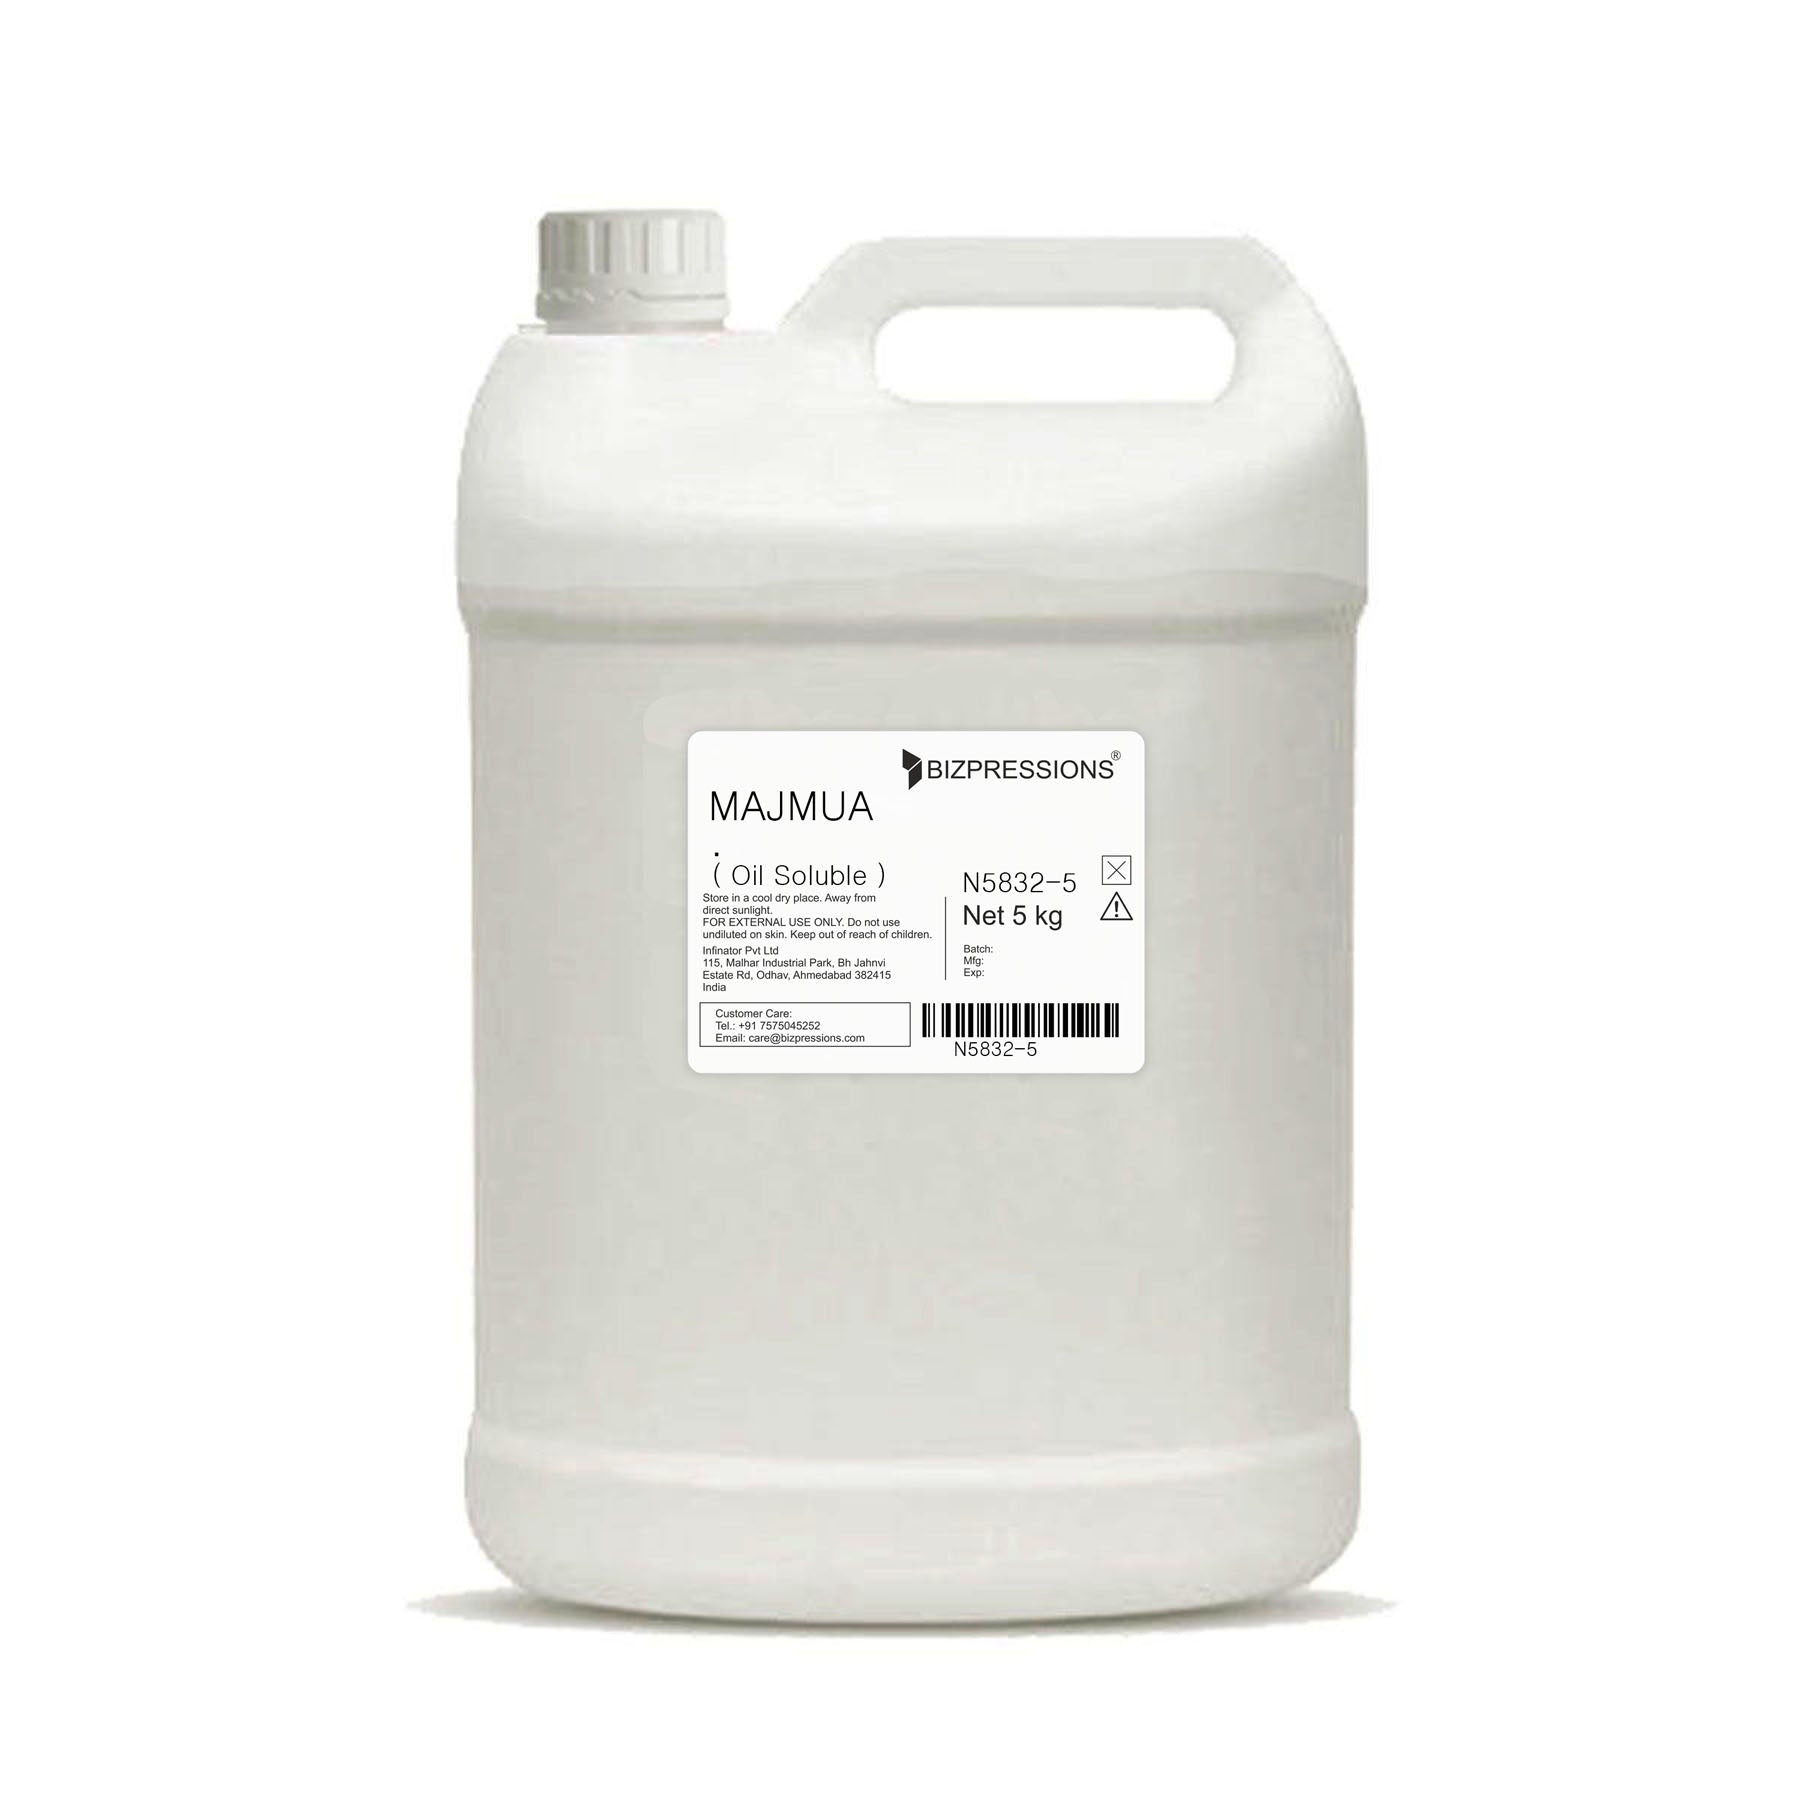 MAJMUA - Fragrance ( Oil Soluble ) - 5 kg